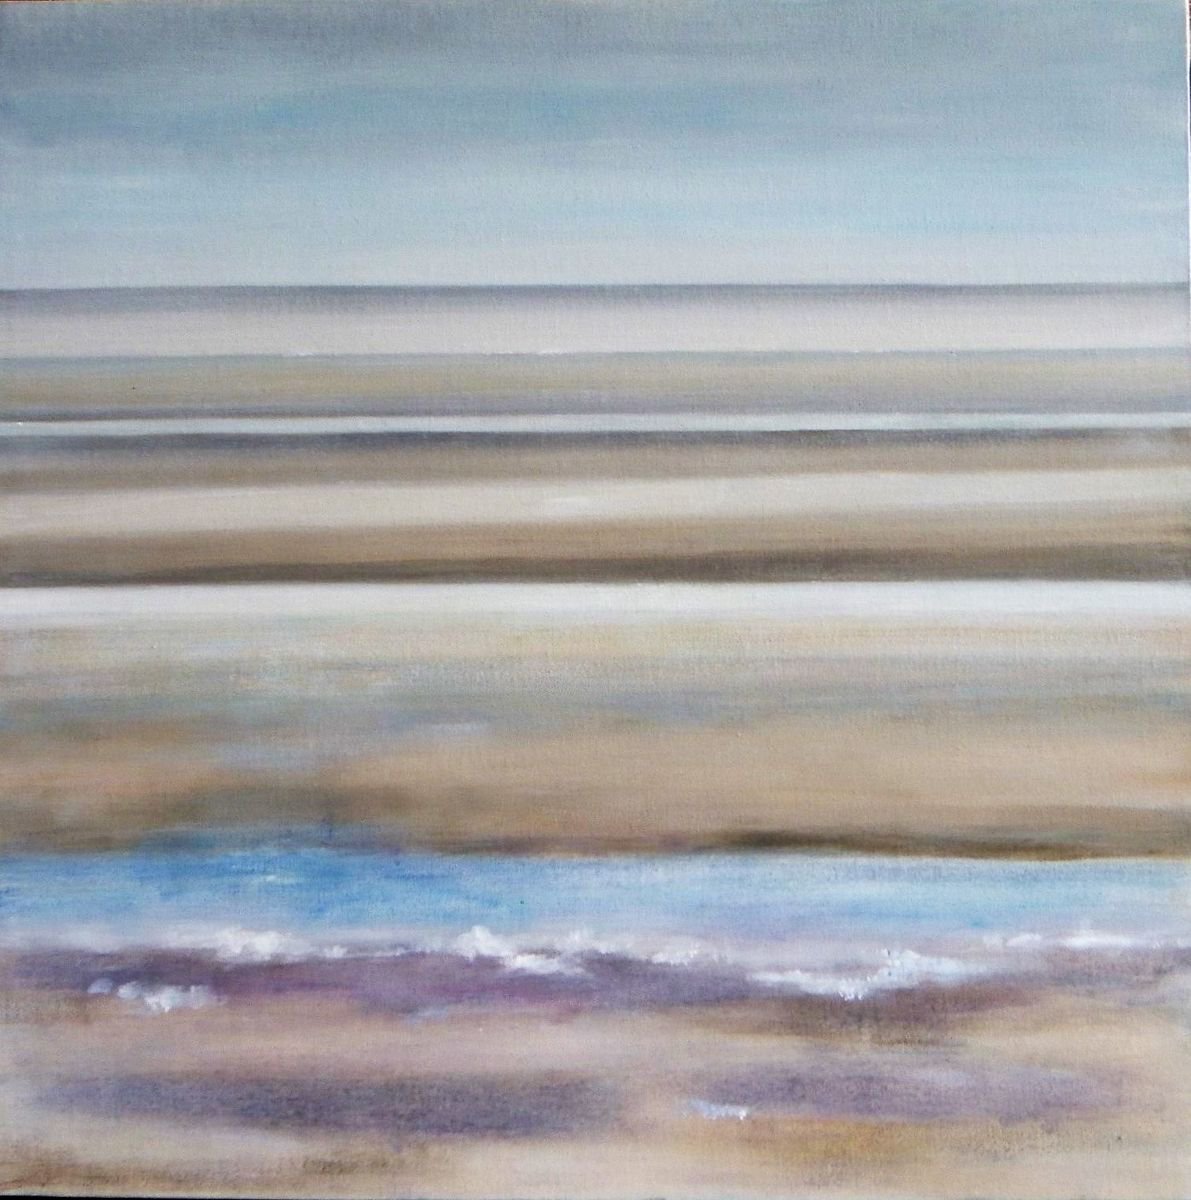 Ebbing Tide - Camber Sands by Sherry Edmondson